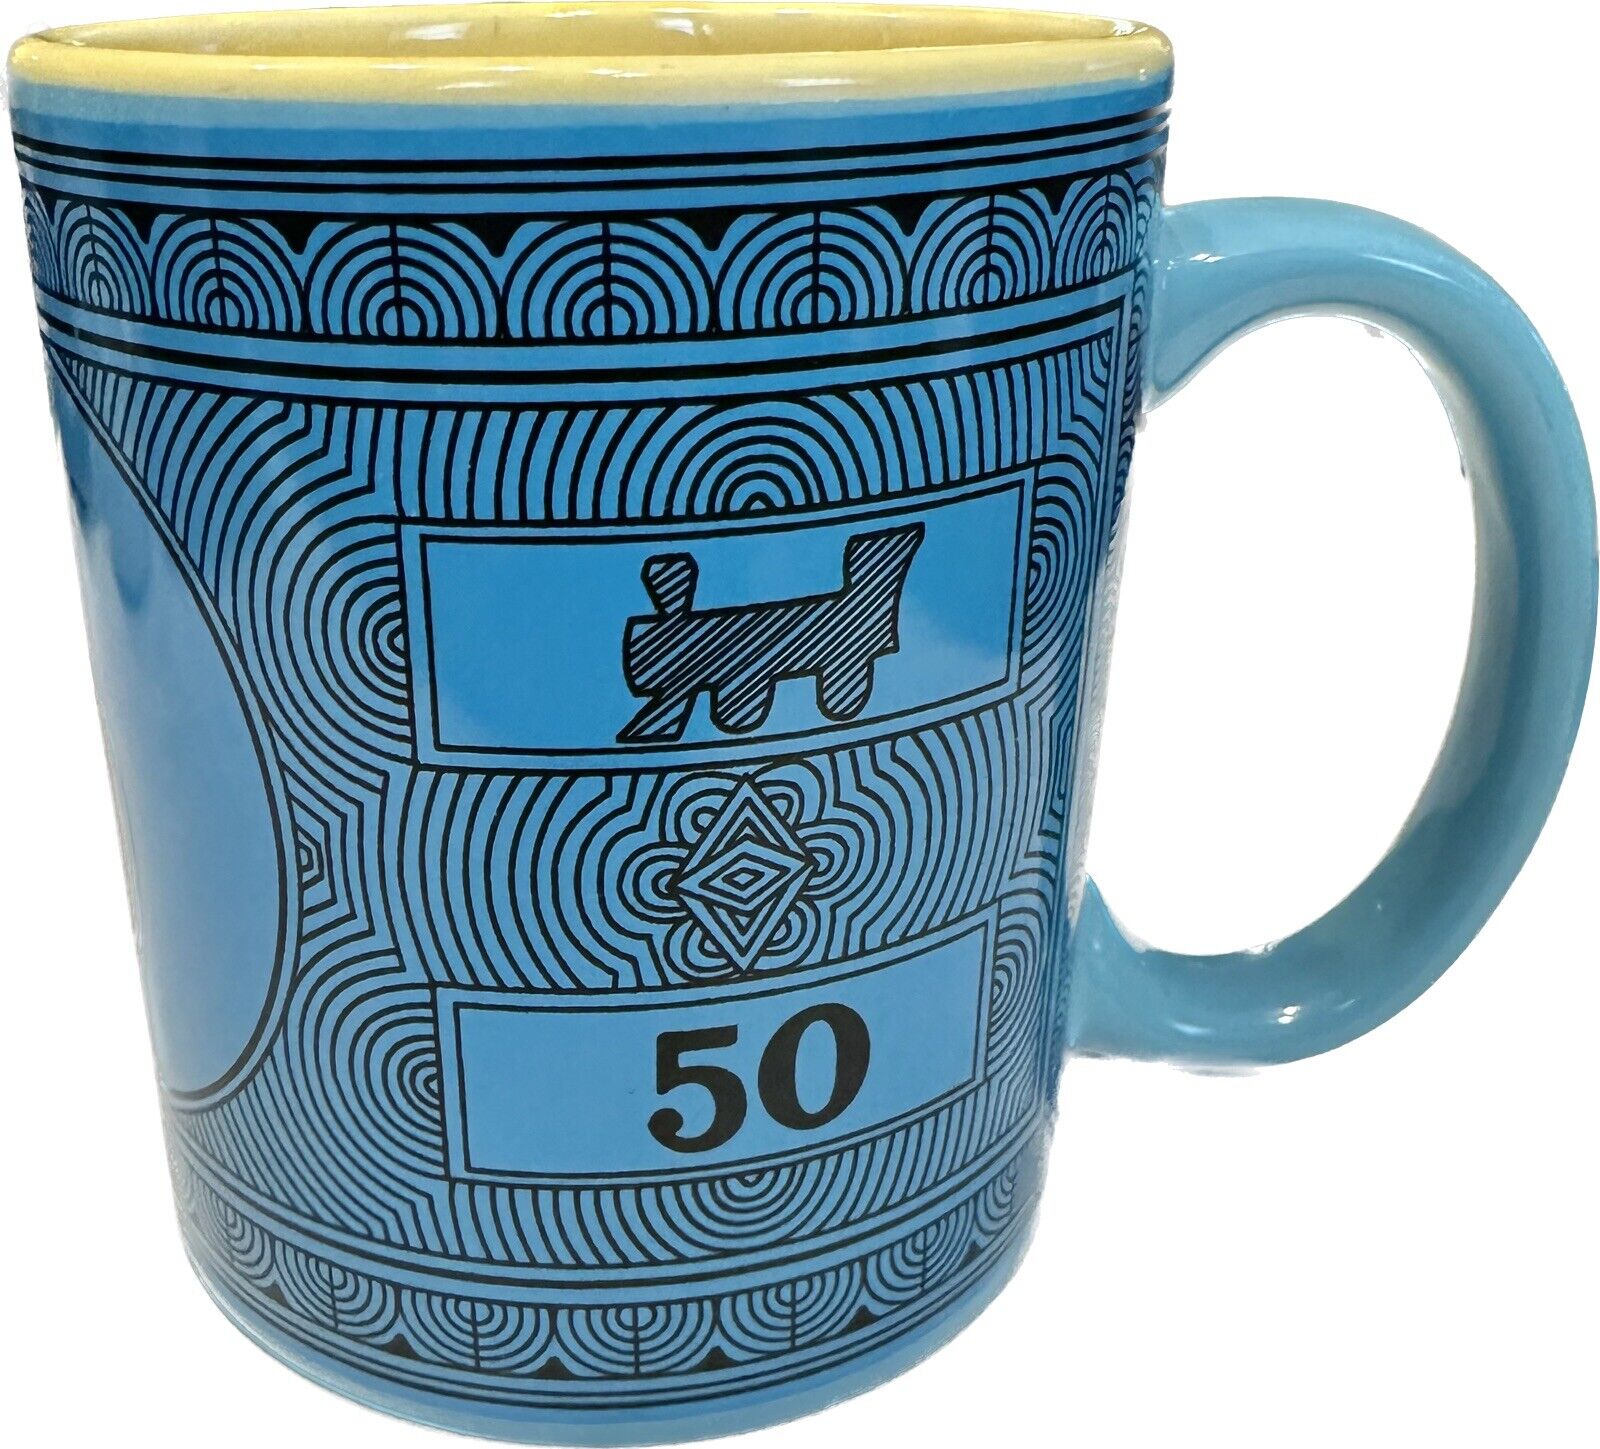 Hasbro Monopoly Money Coffee, Tea Mug (2015), 50 Dollar Bill, New, NWOT